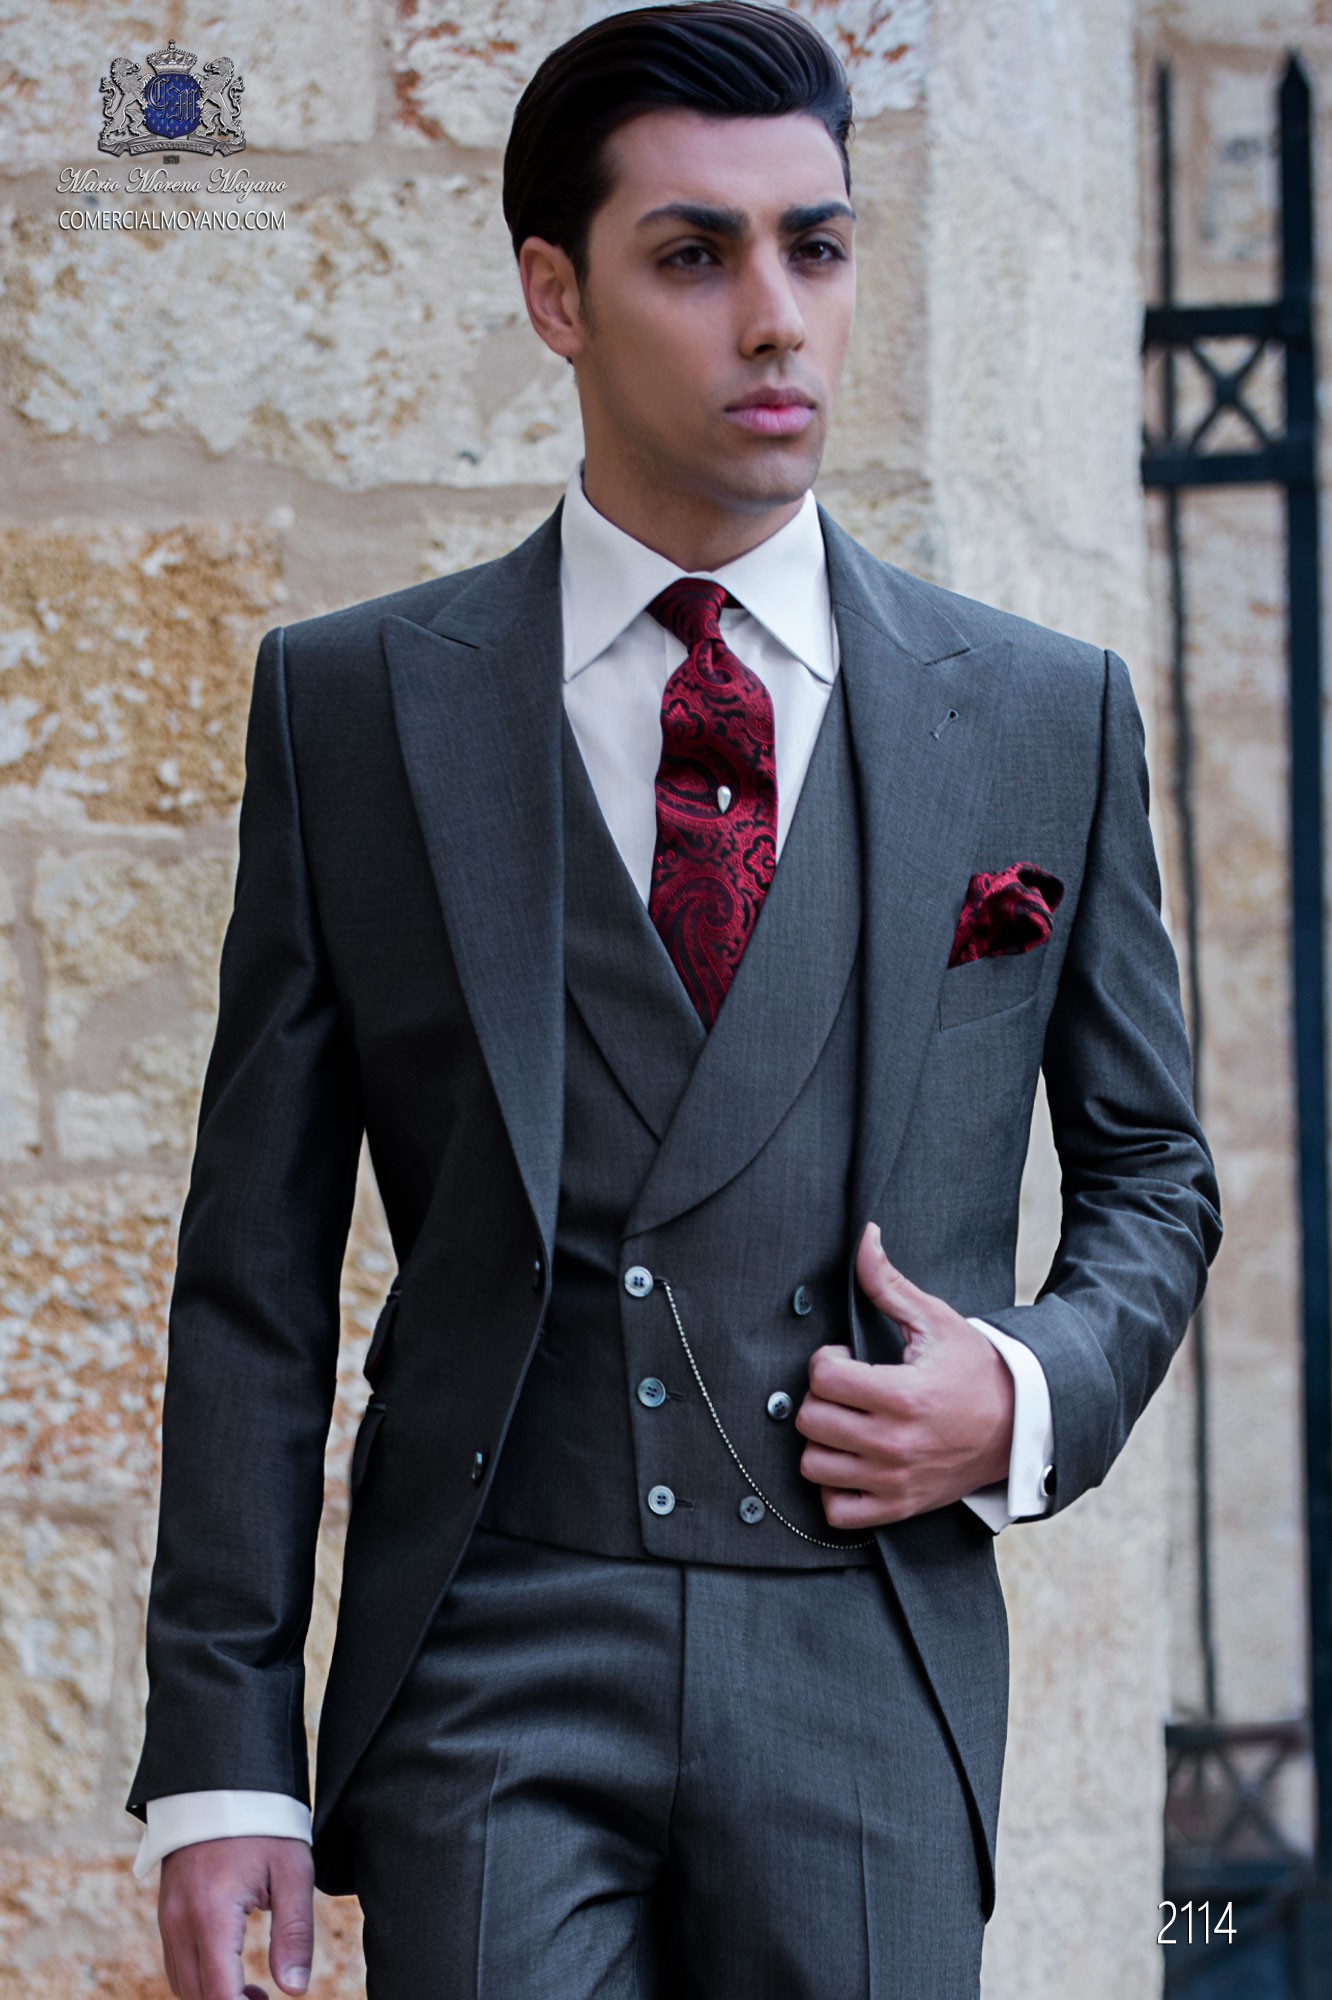 Traje de novio gris antracita lana mohair alpaca modelo: 2114 Mario Moyano colección Gentleman